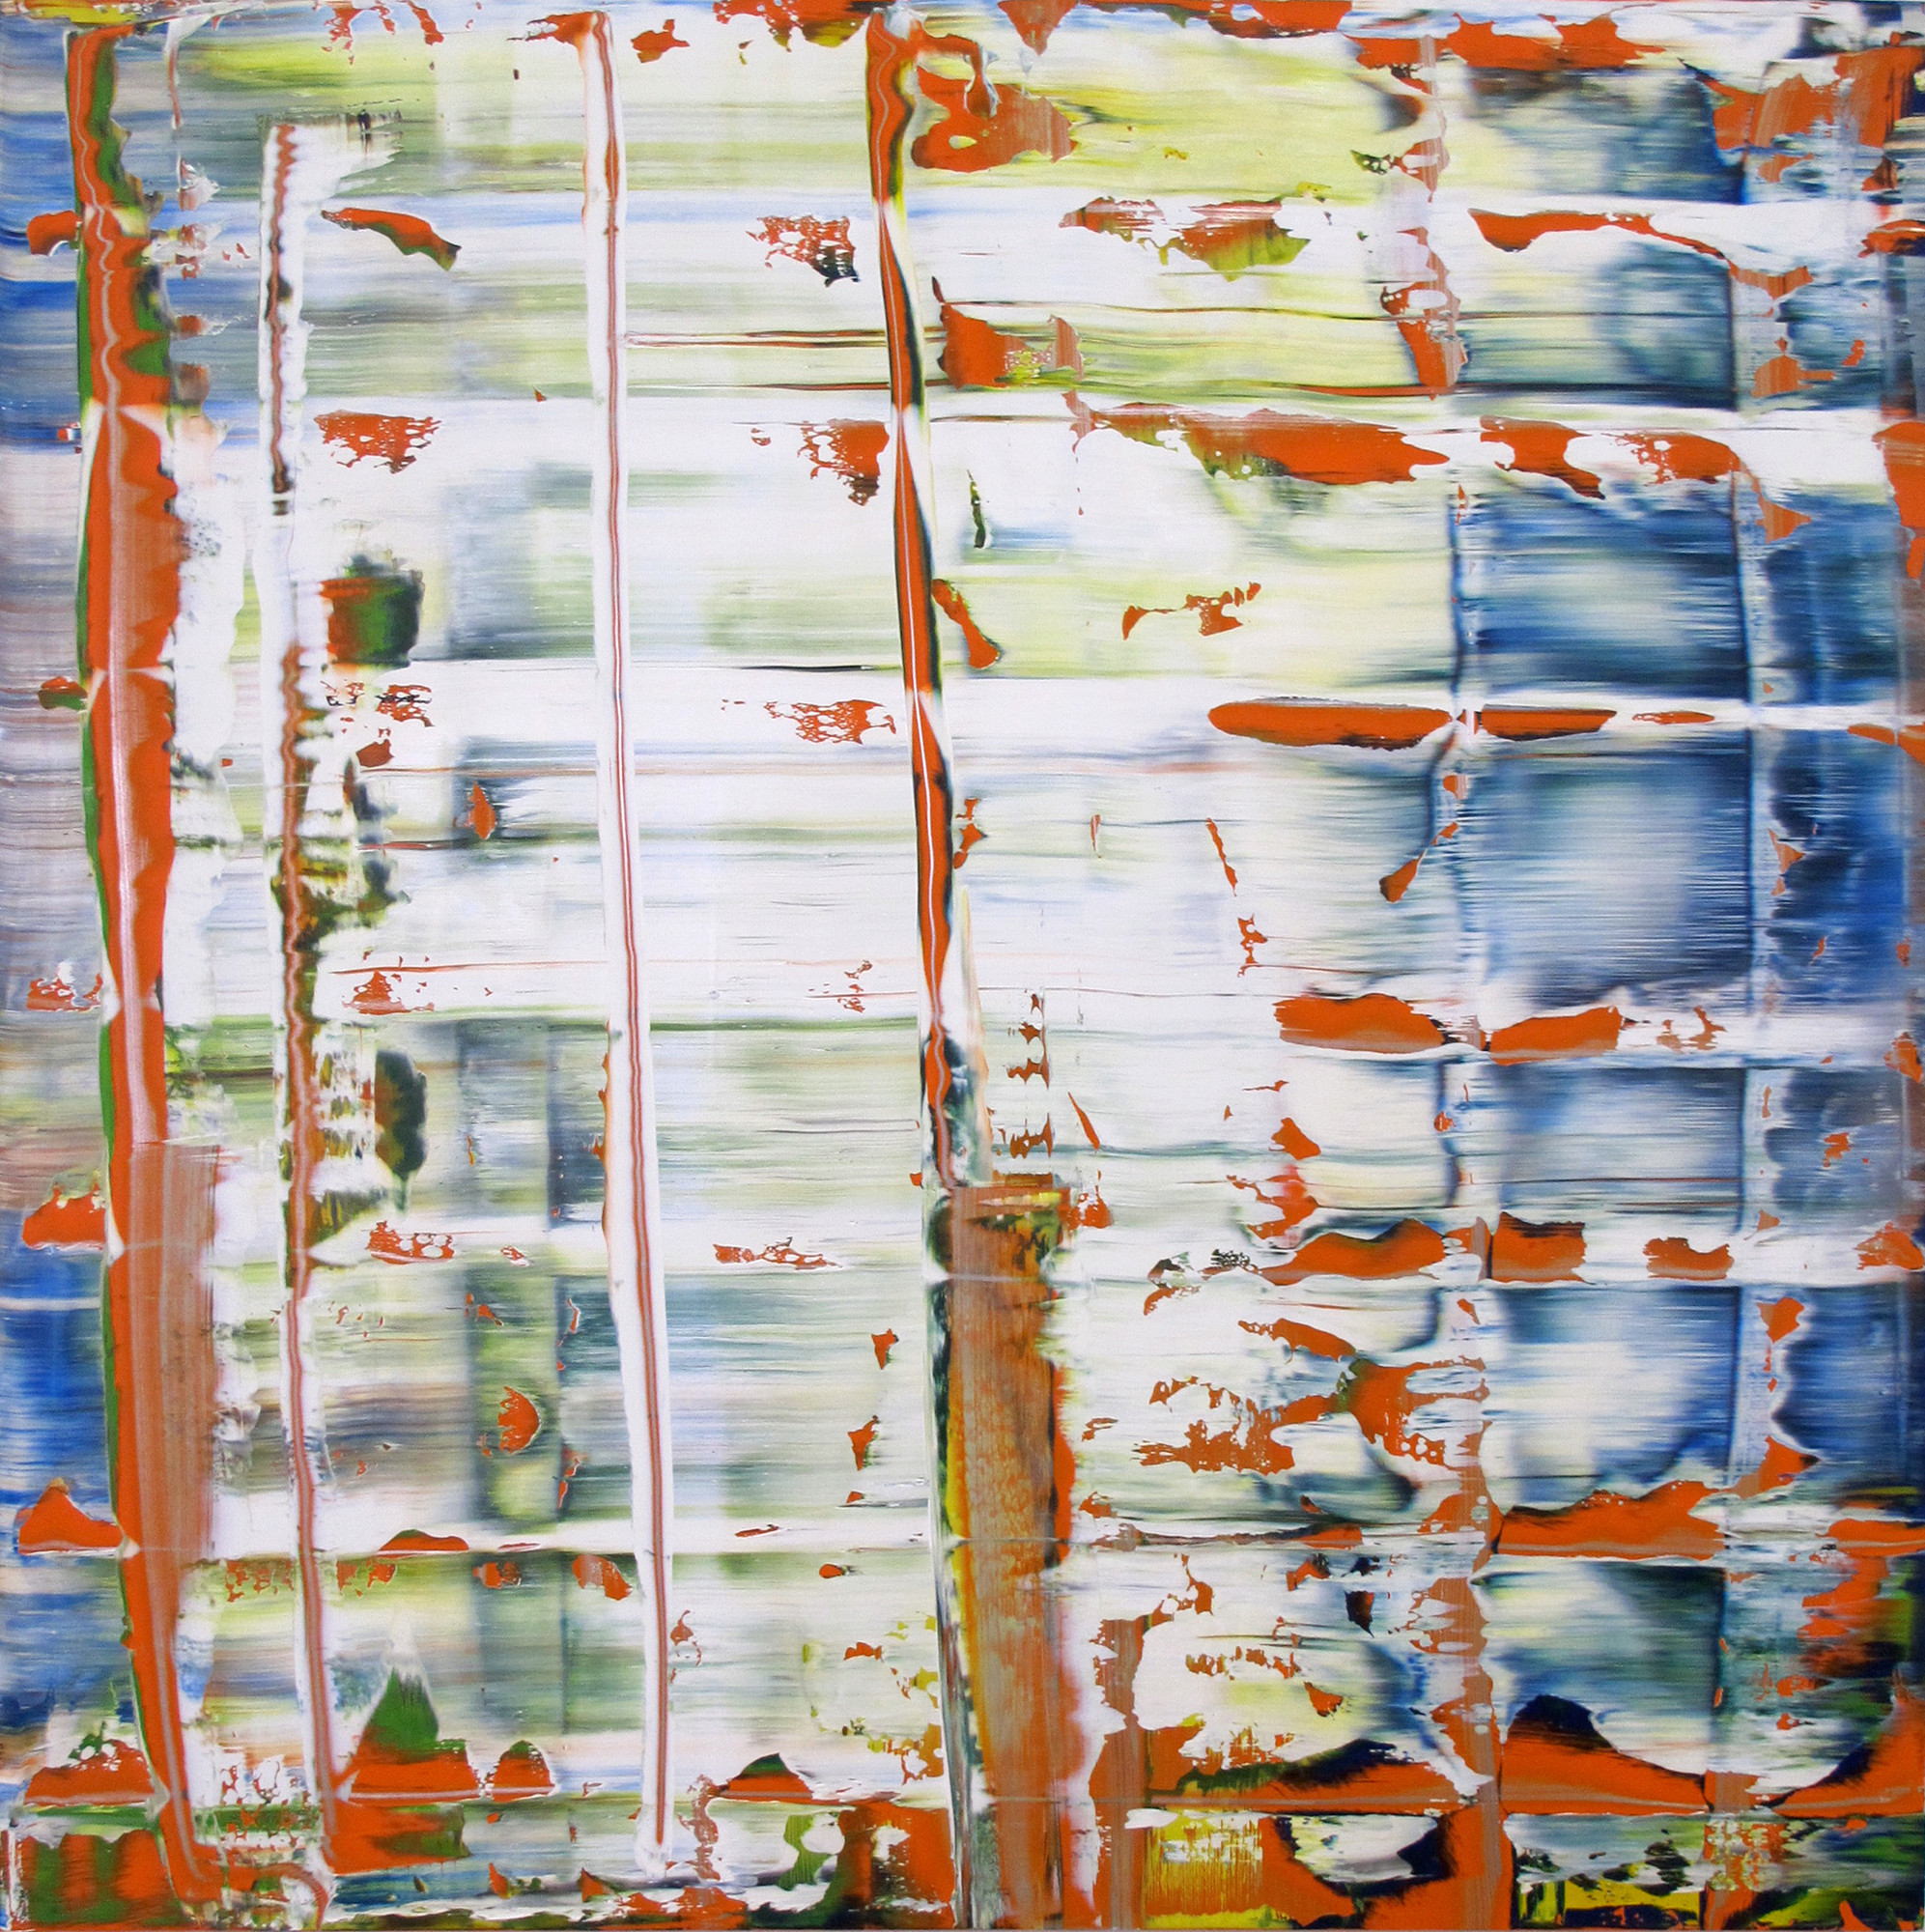 Gerhard Richter at MOMA